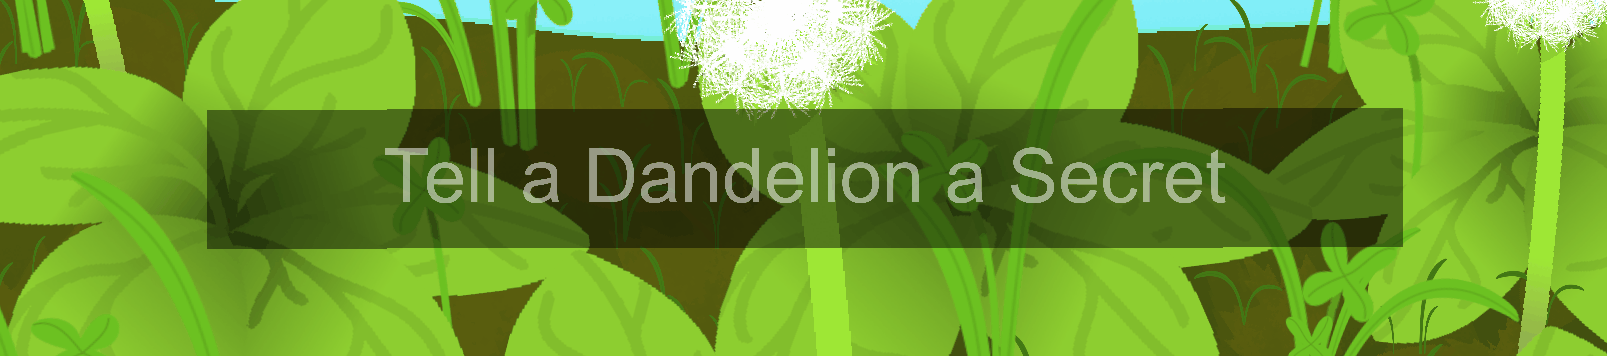 Tell a Dandelion a Secret